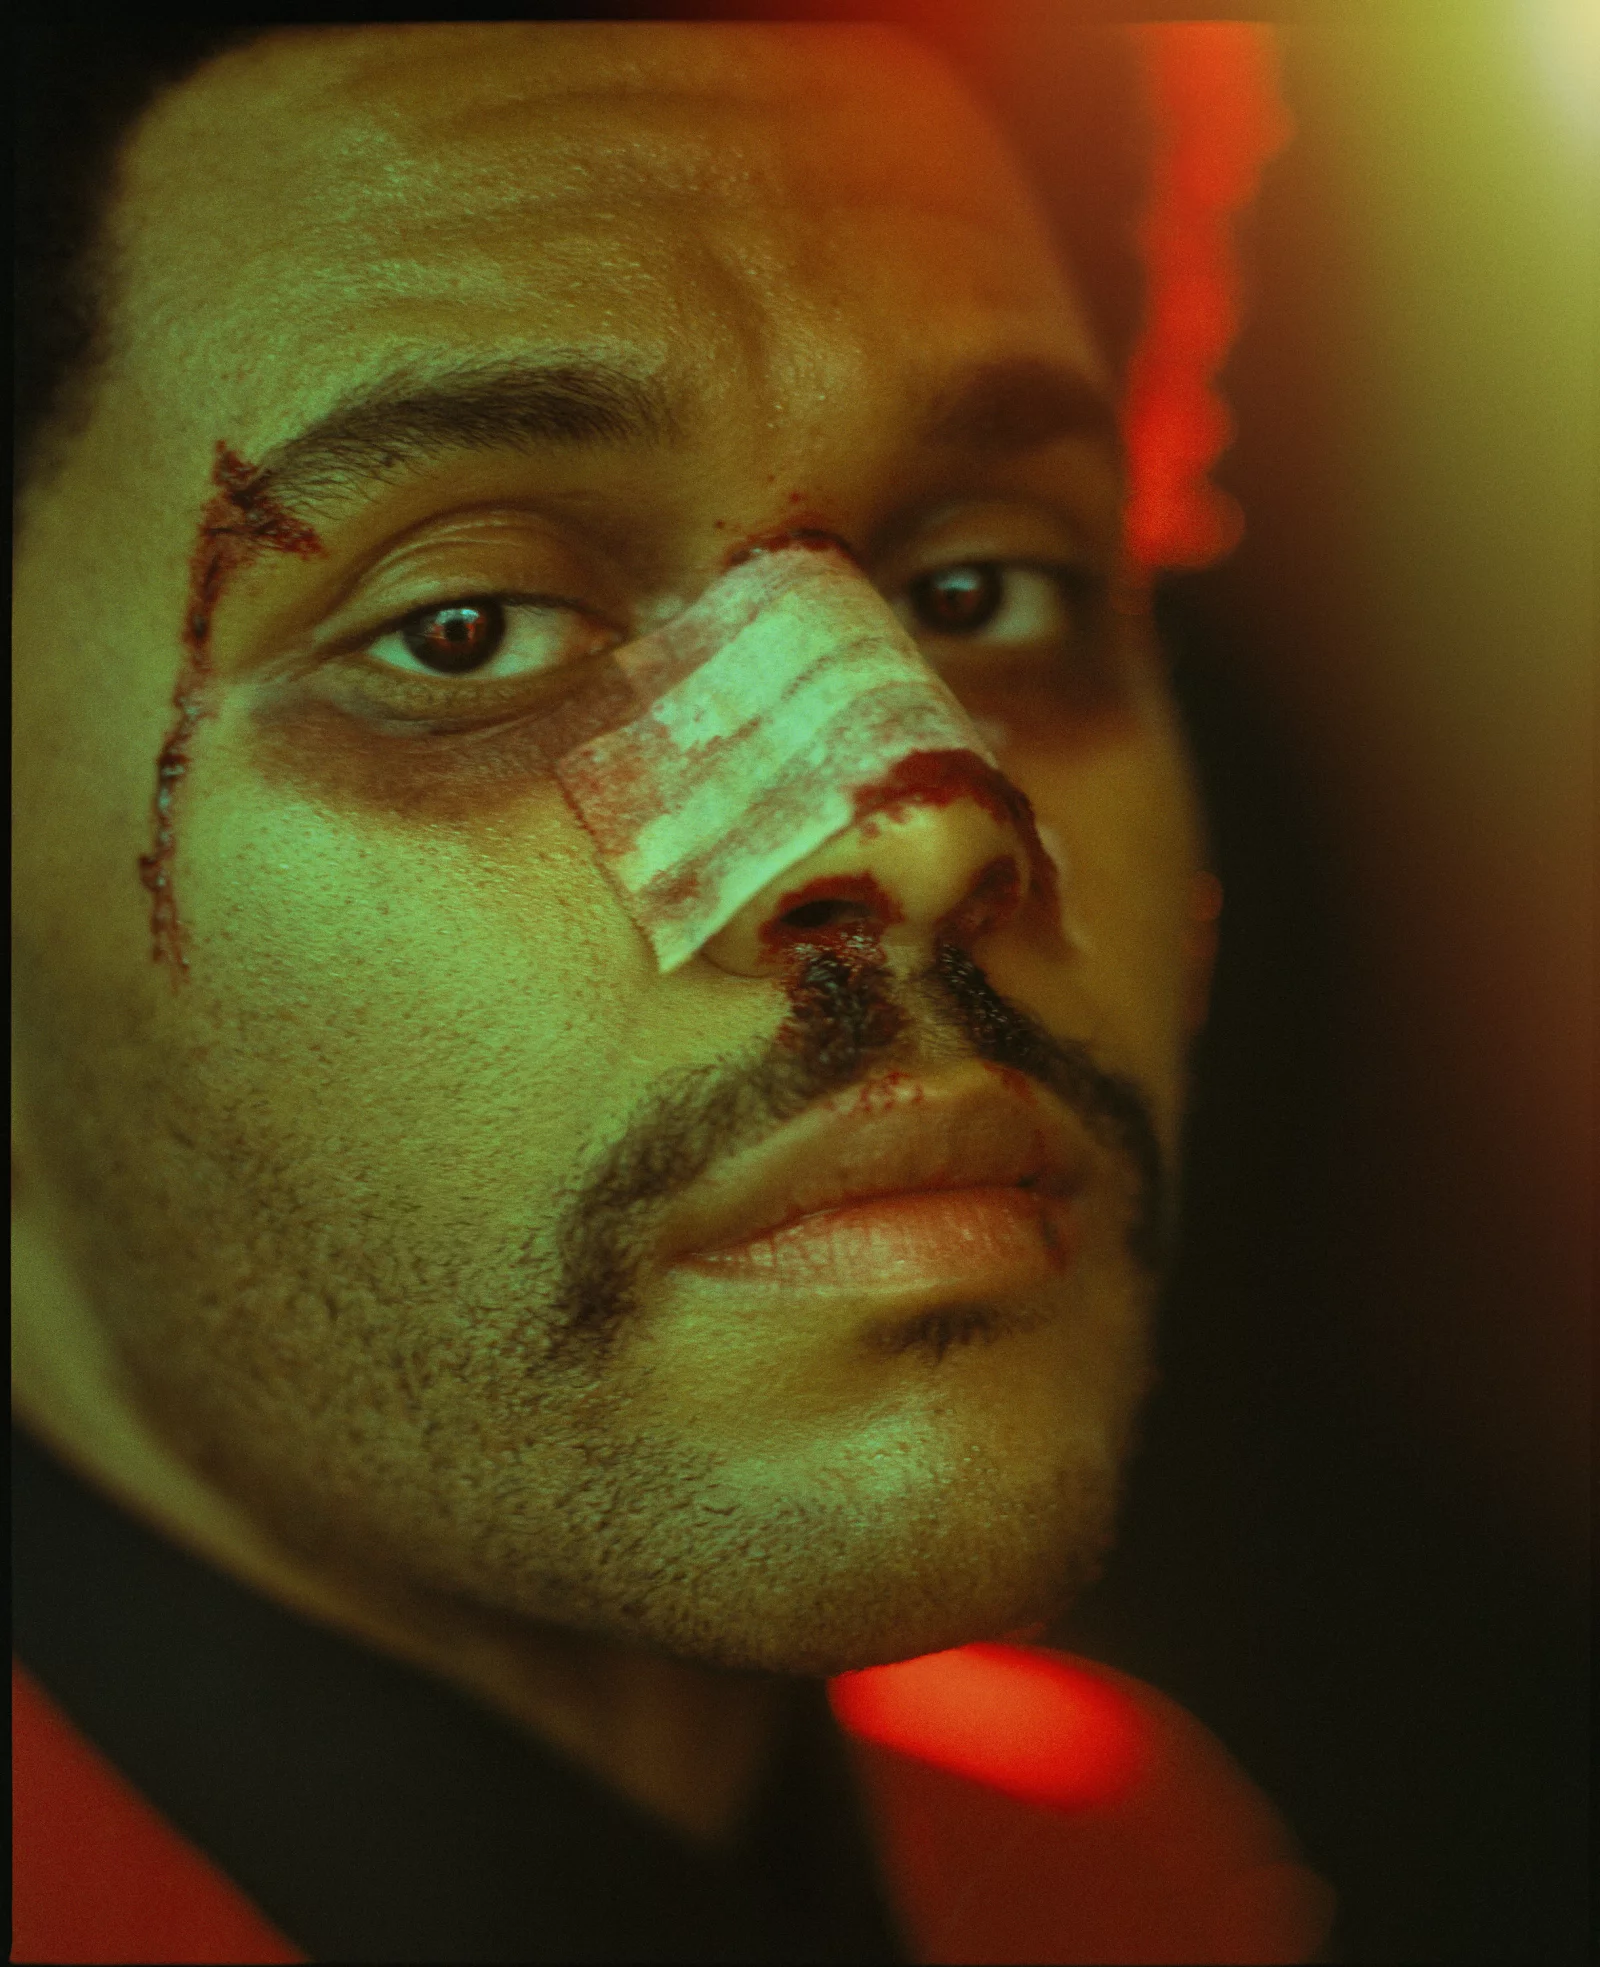 The Weeknd Billboard 2 by Anton TAMMI